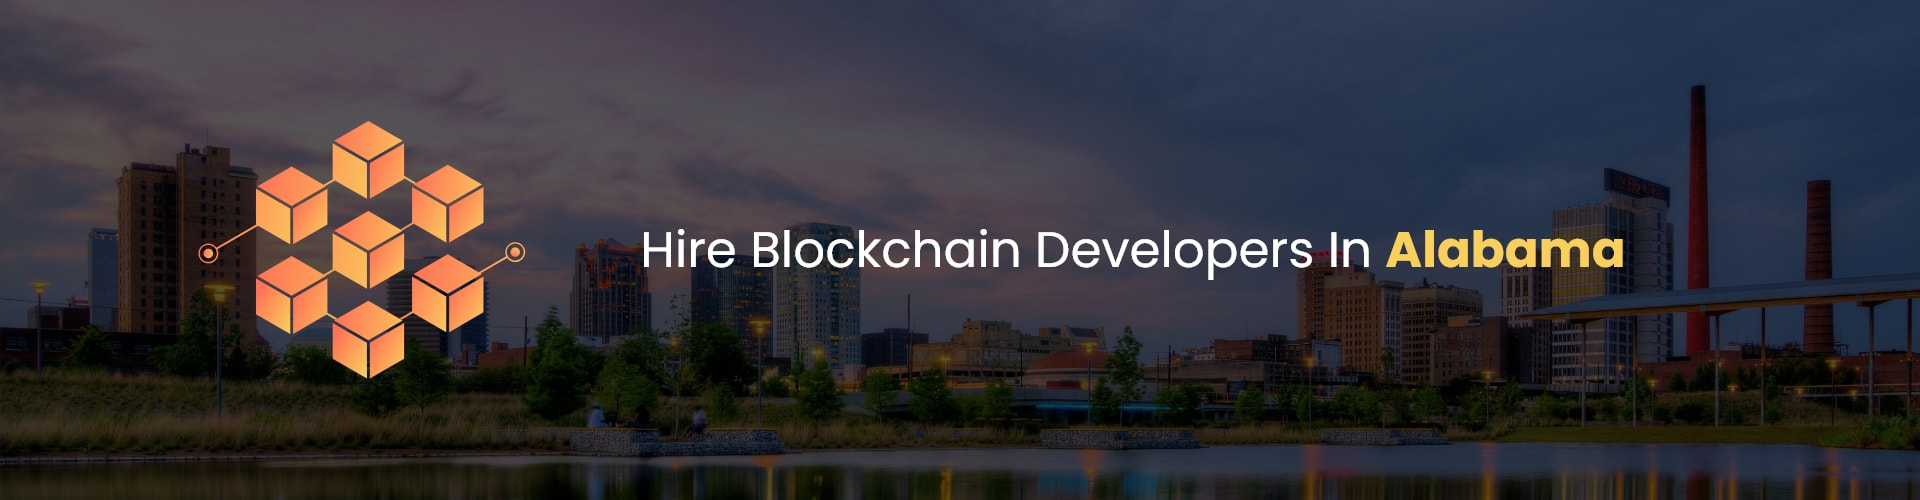 hire blockchain developers in alabama